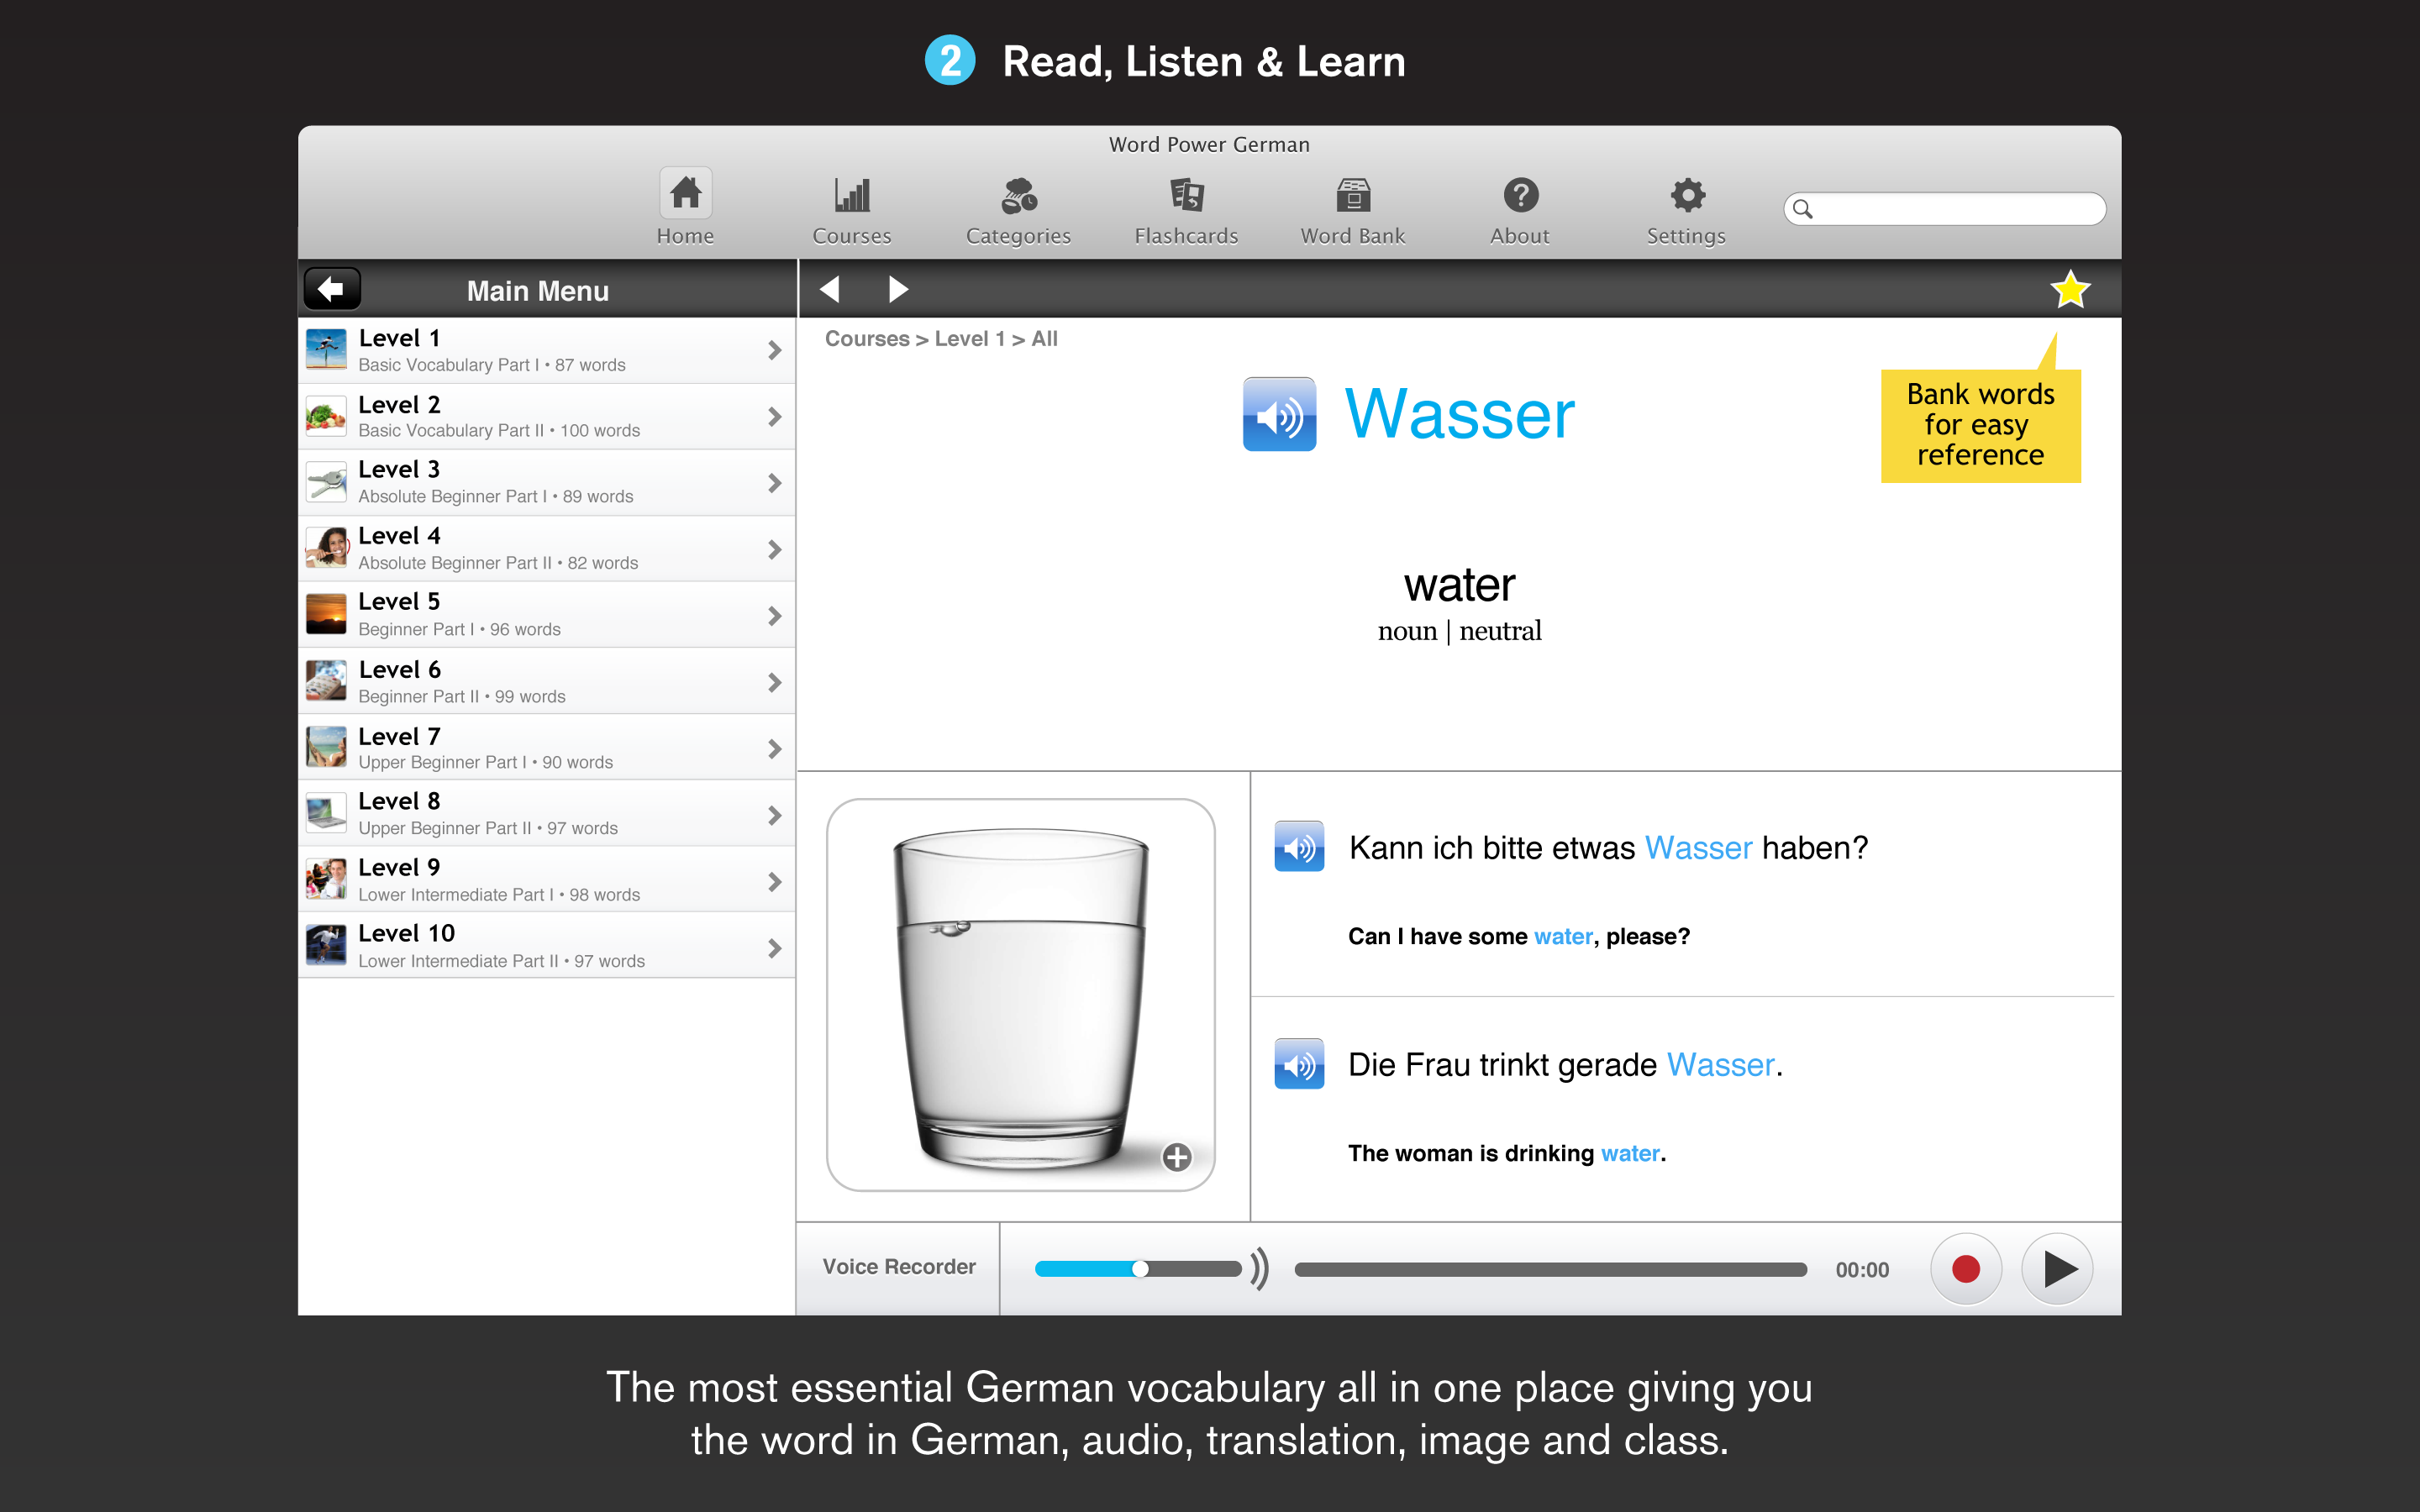 Screenshot 2 - Learn German - Gengo WordPower 